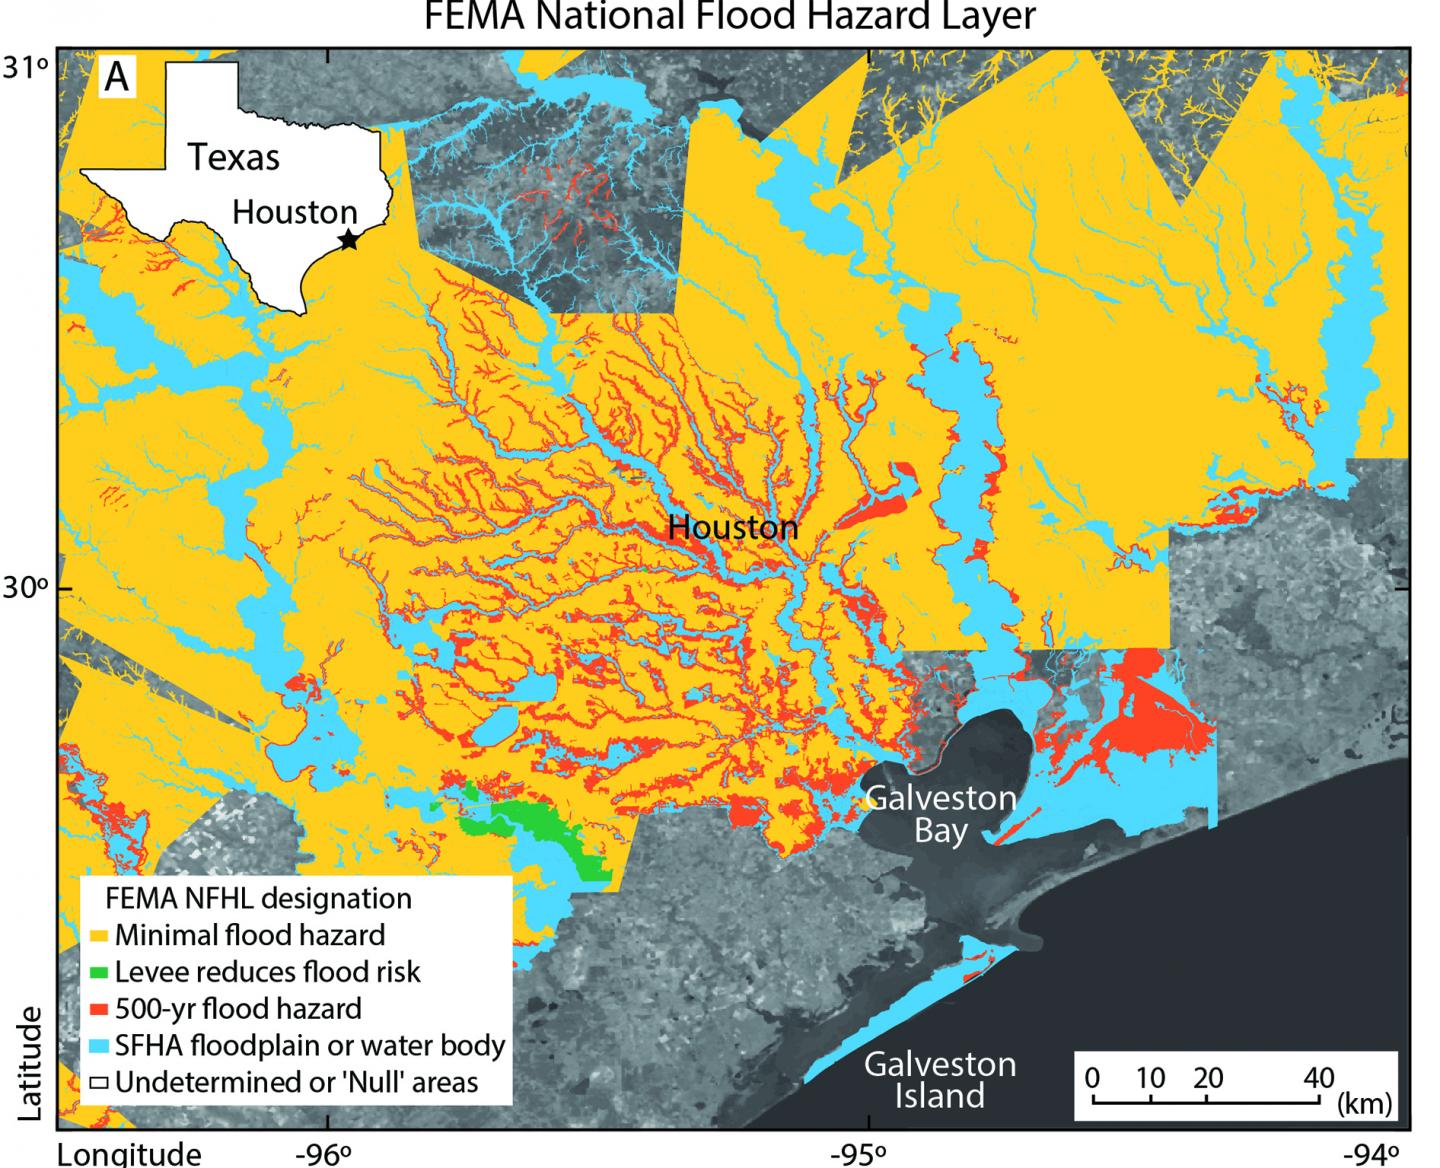 Flood Risk Classifications